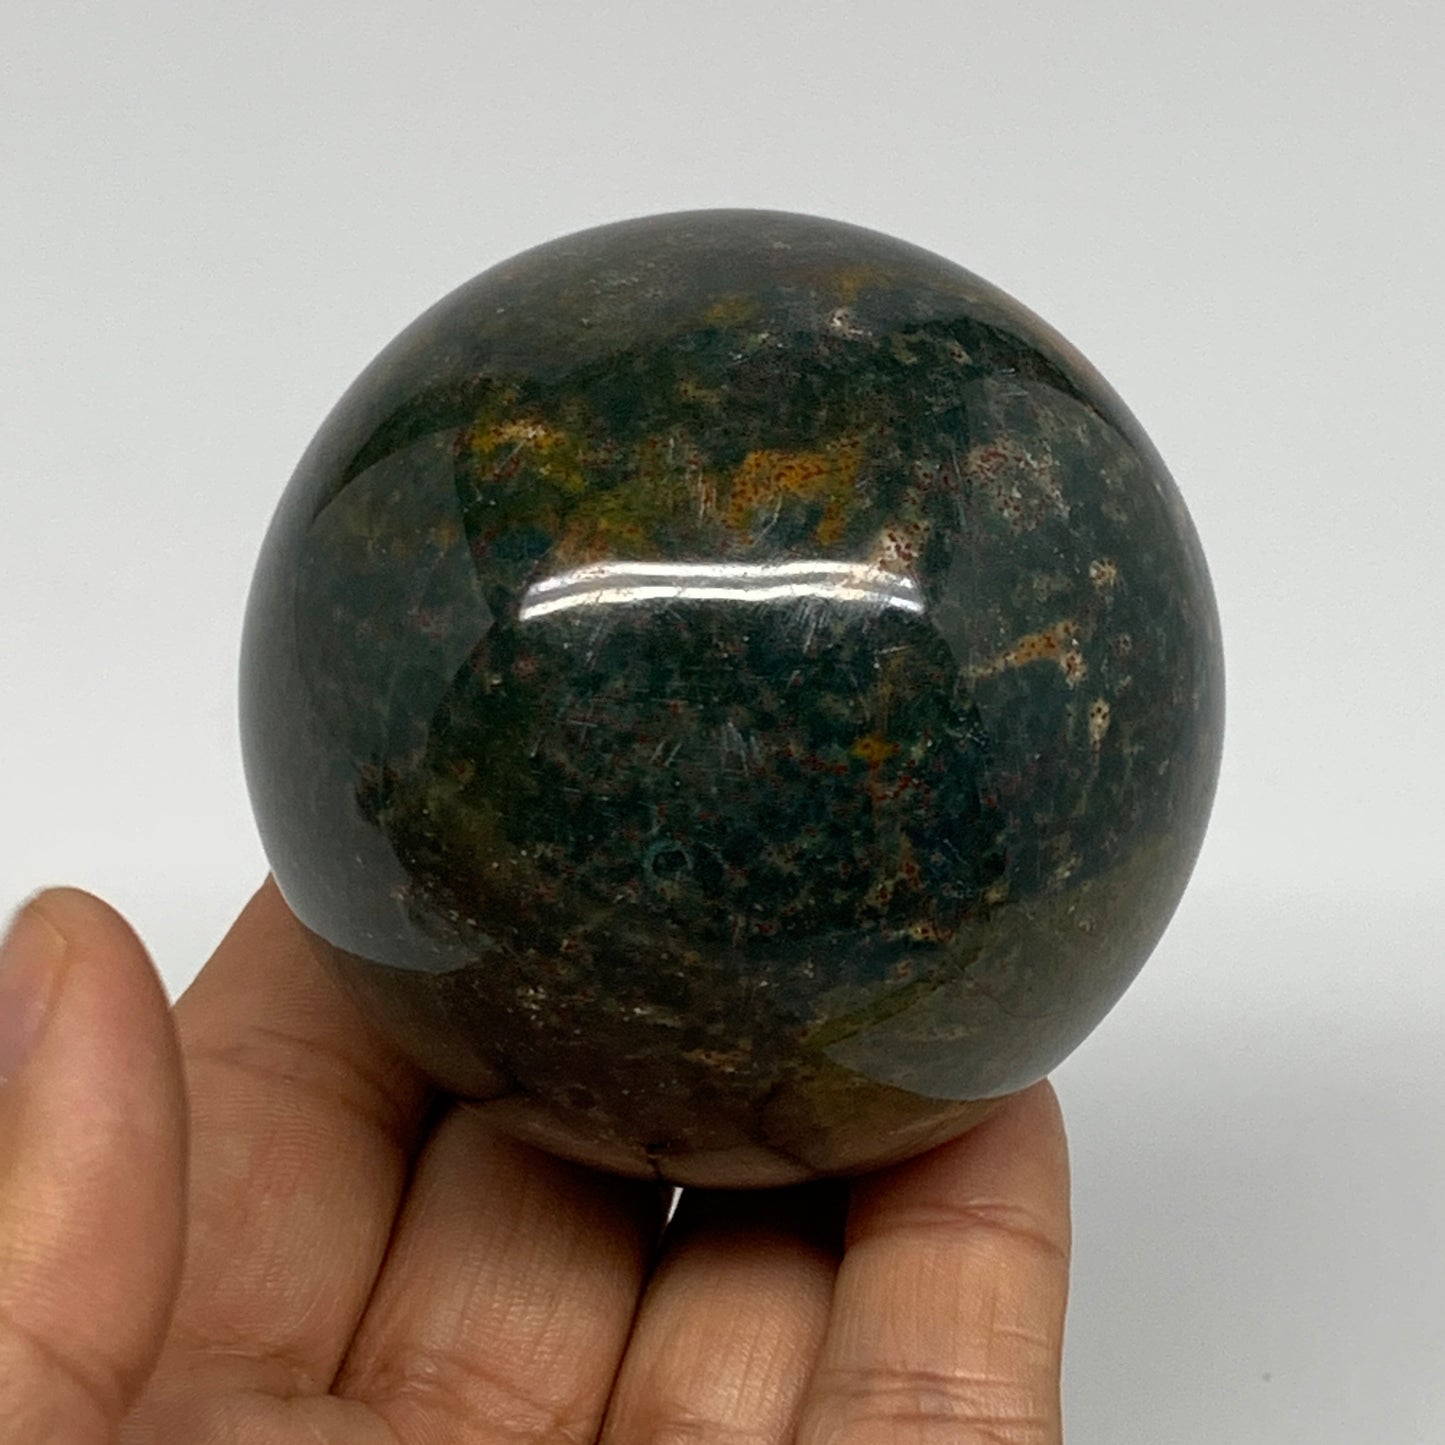 340.3g, 2.5" (62mm), Ocean Jasper Sphere Geode Crystal Reiki @Madagascar, B25354